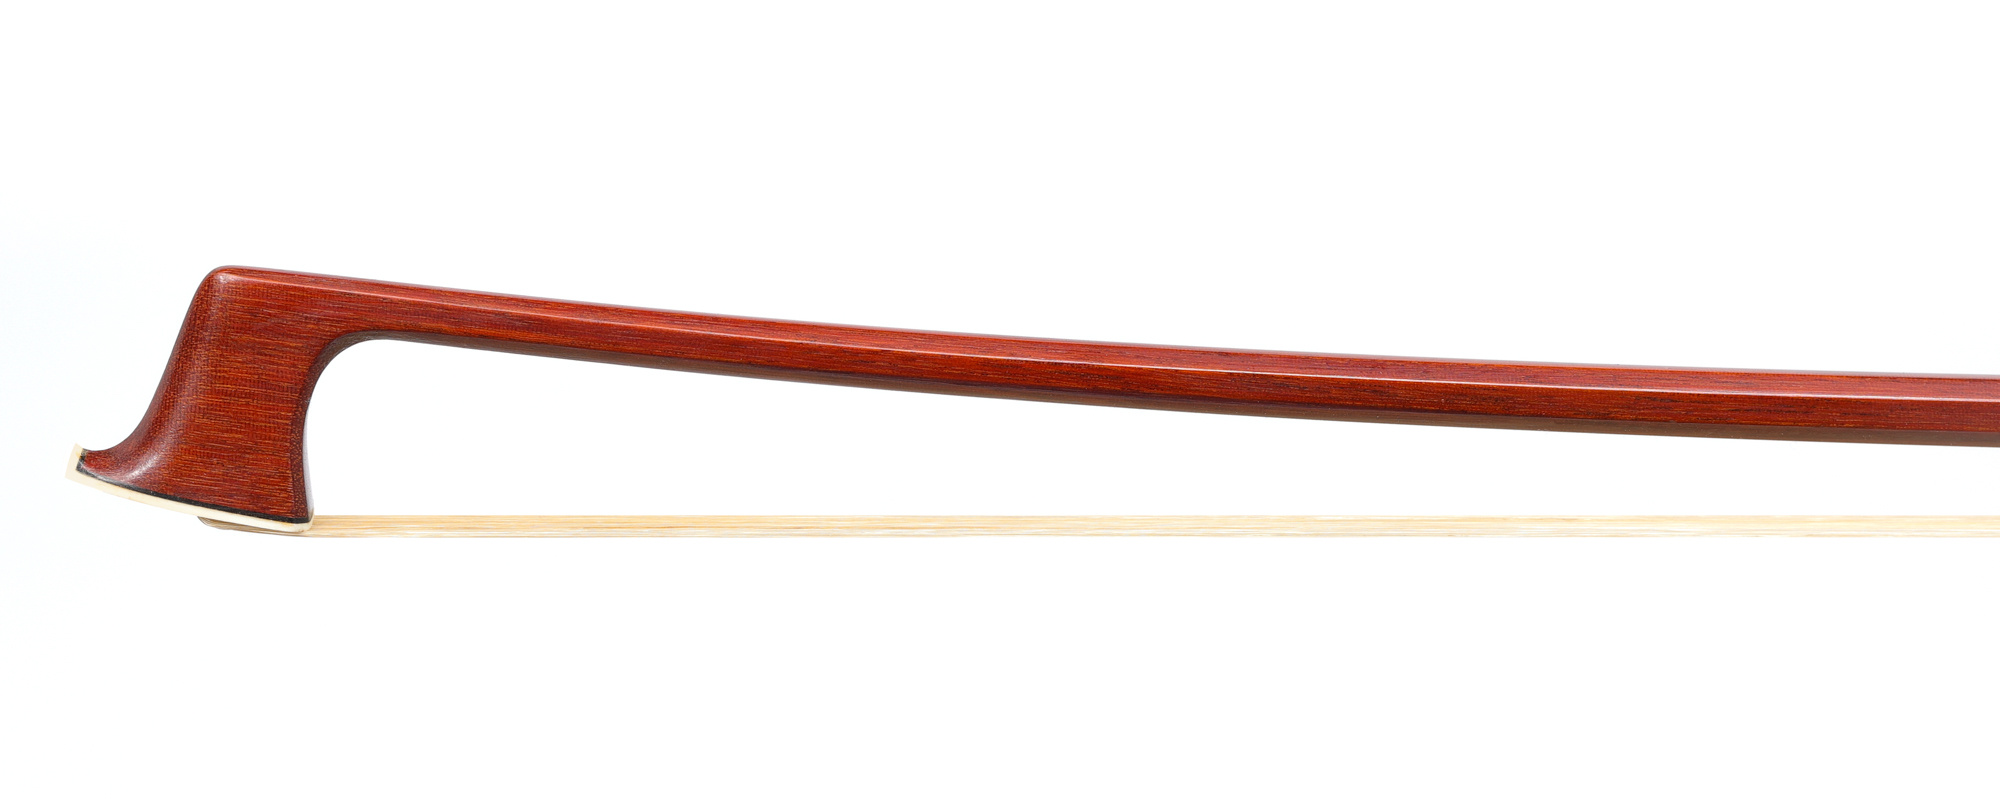 KARL HÖFNER violin bow, dark octagonal Pernambuco stick, ebony & nickel mounted frog with Parisian eyes, GERMANY